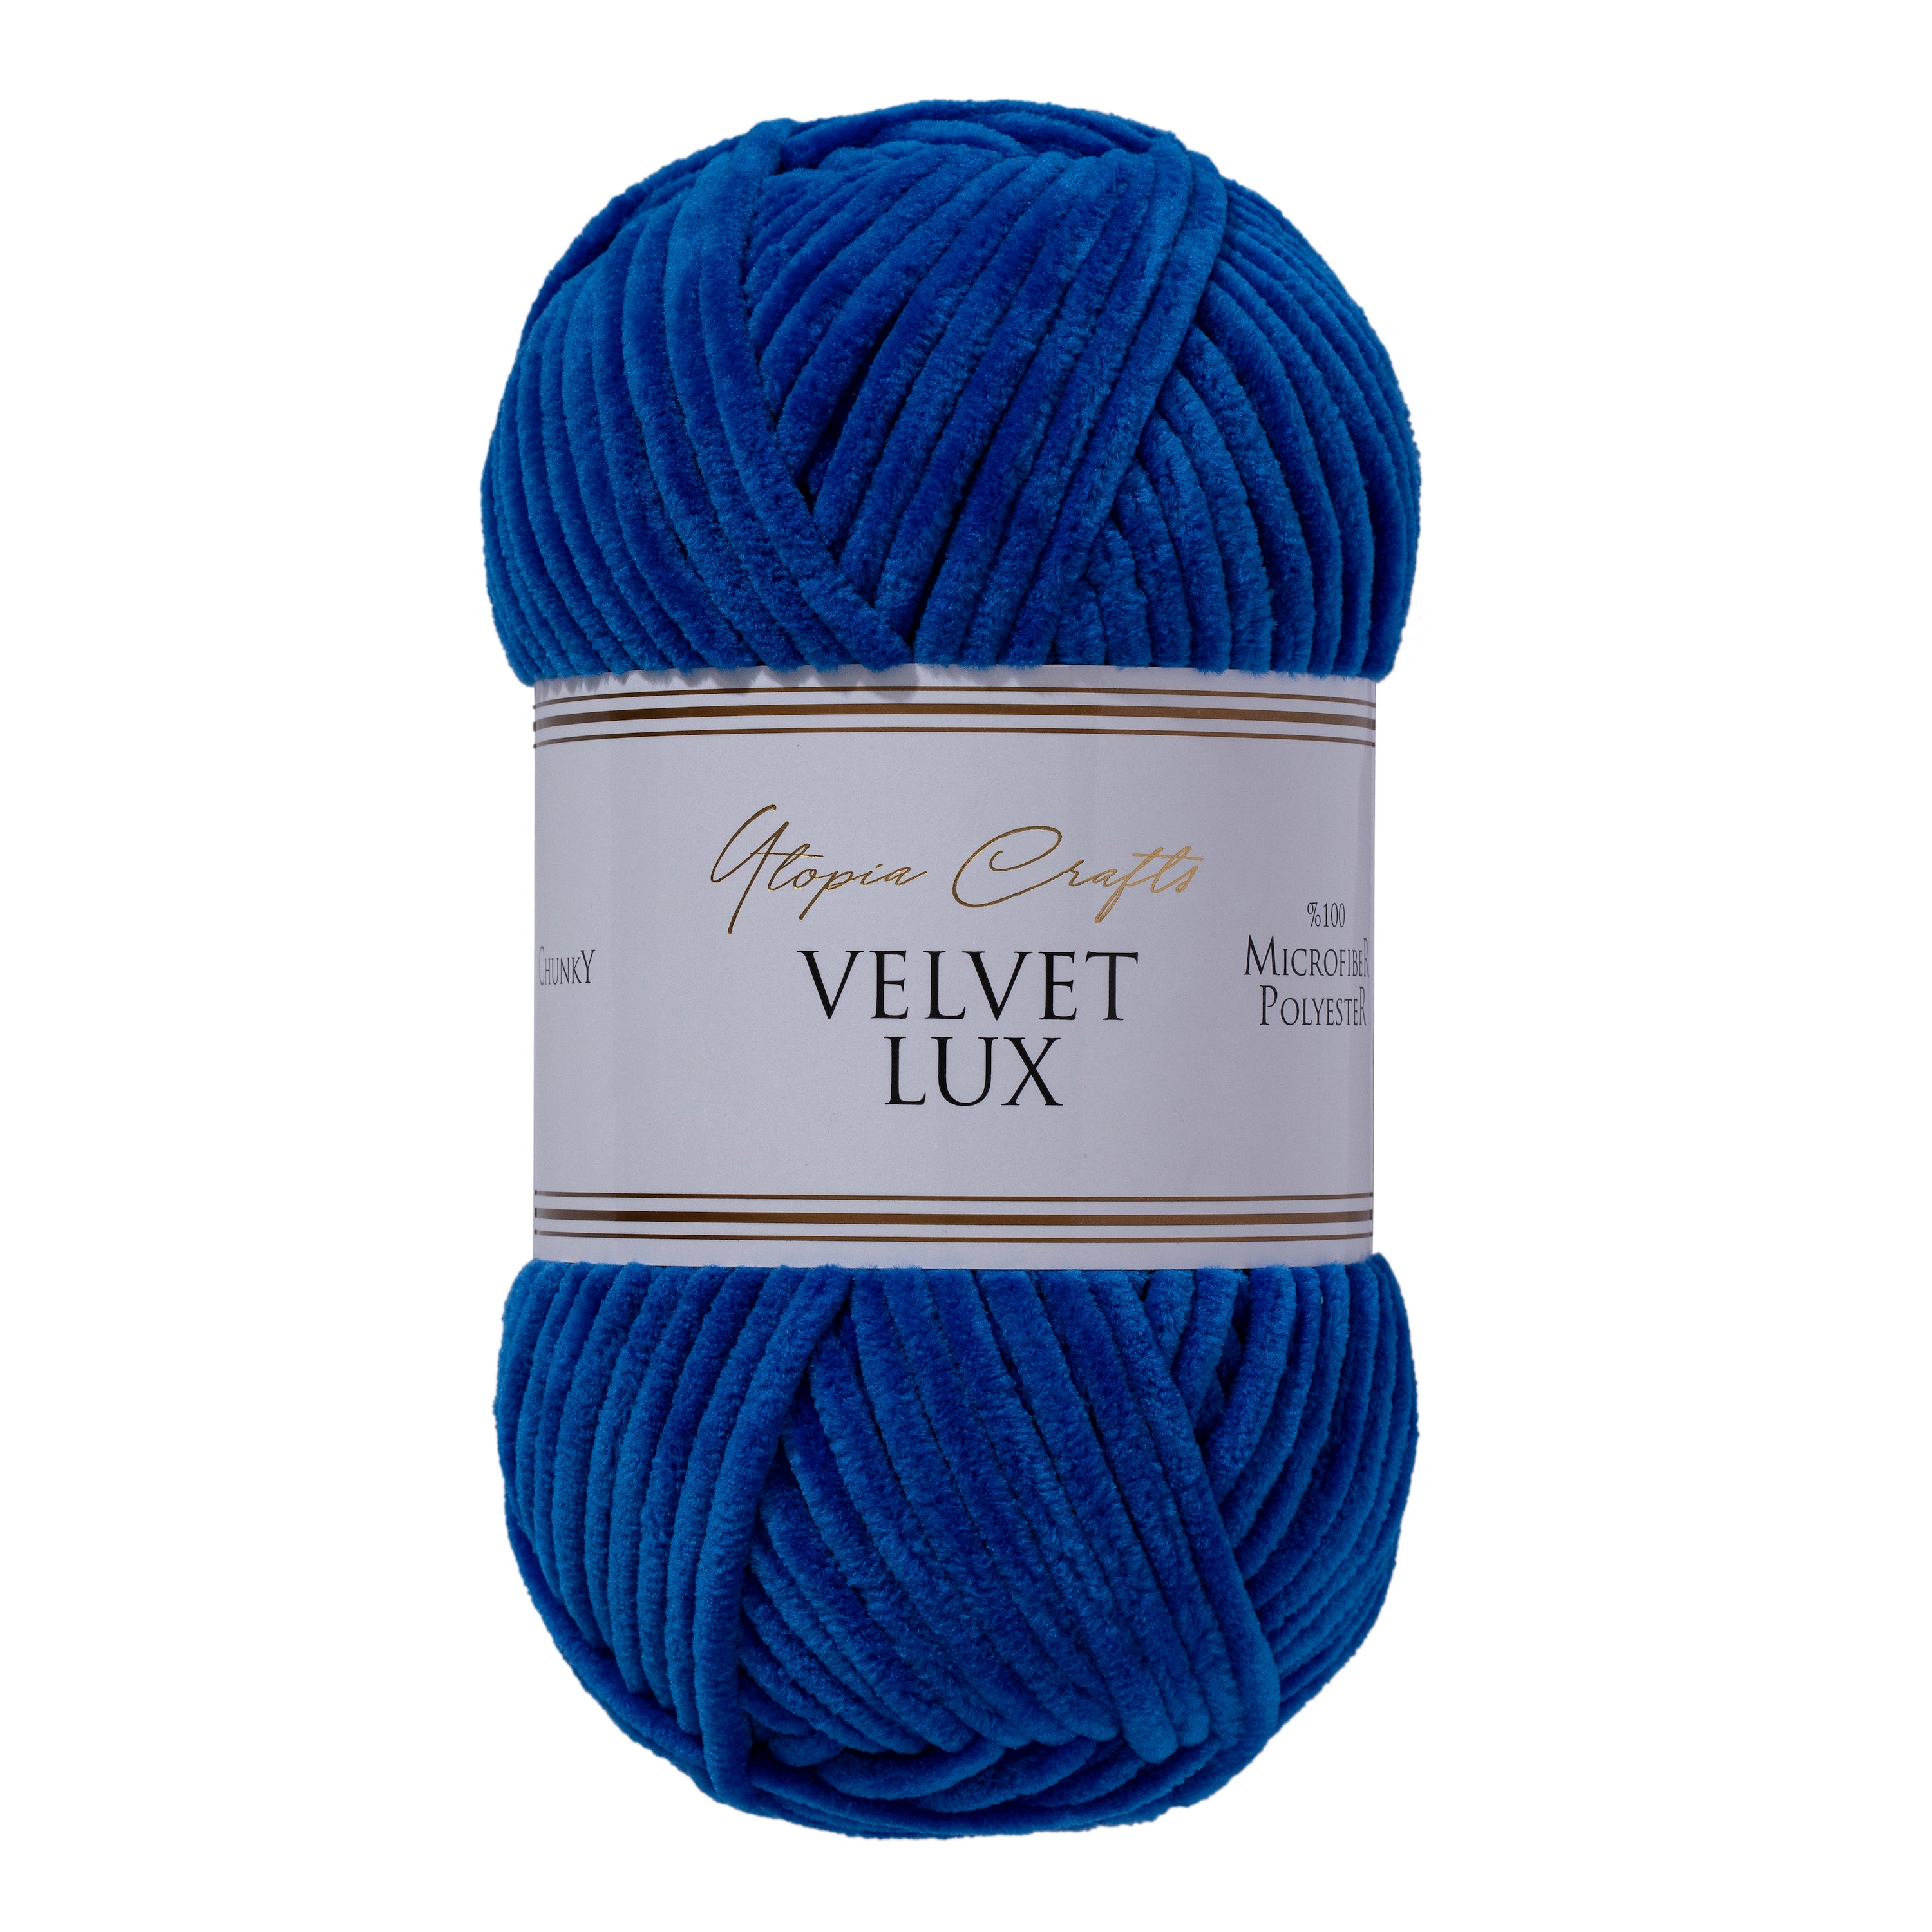 Utopia Crafts Velvet Lux Chenille Super Soft Chunky Yarn for Knitting and Crochet, 100g - 110m (Navy Blue)